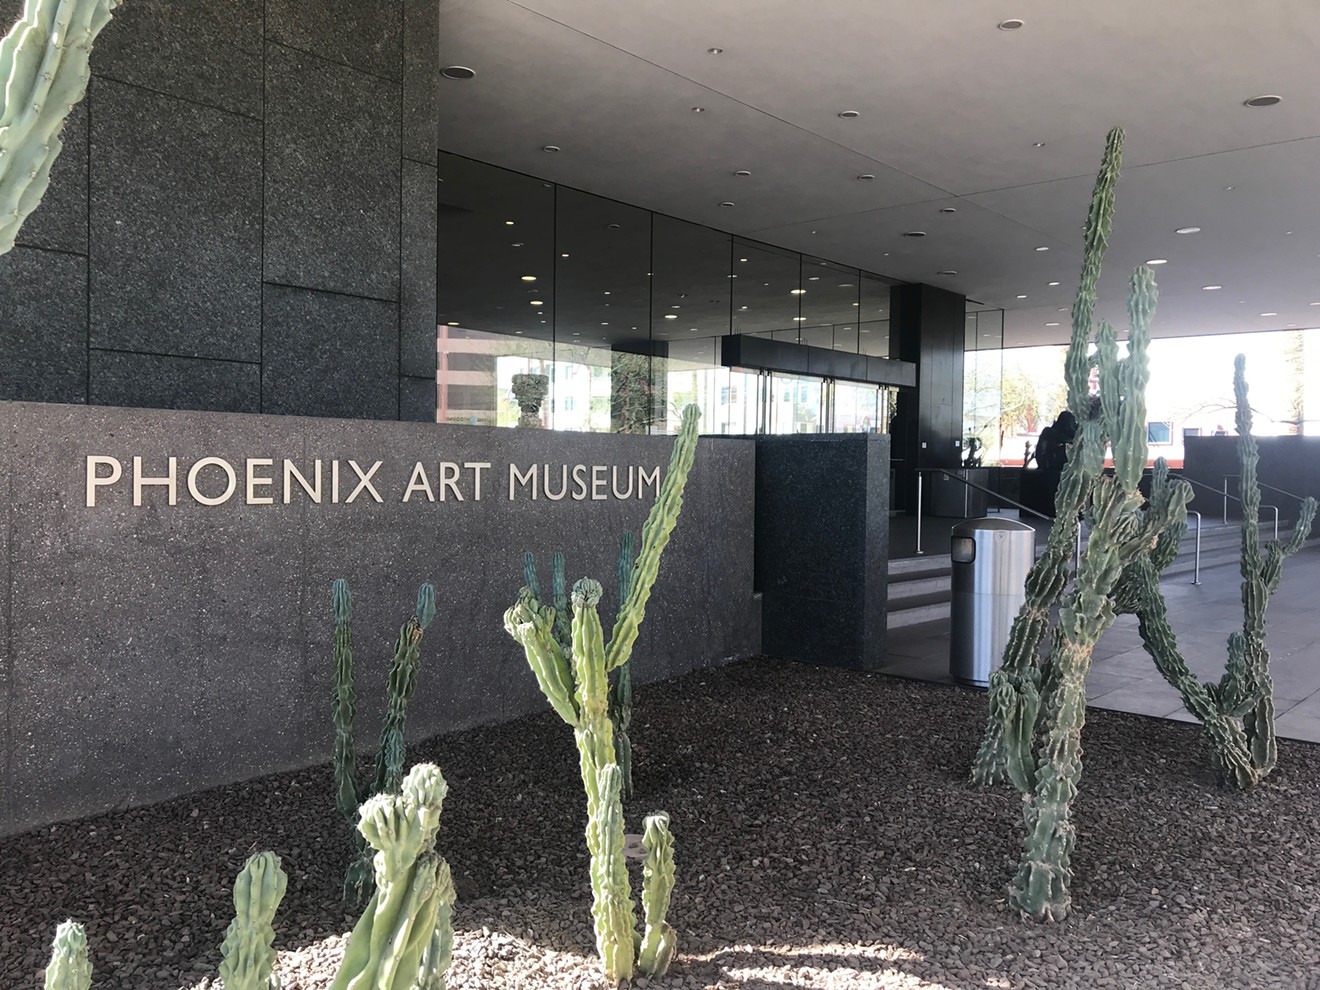 Entrance to Phoenix Art Museum.